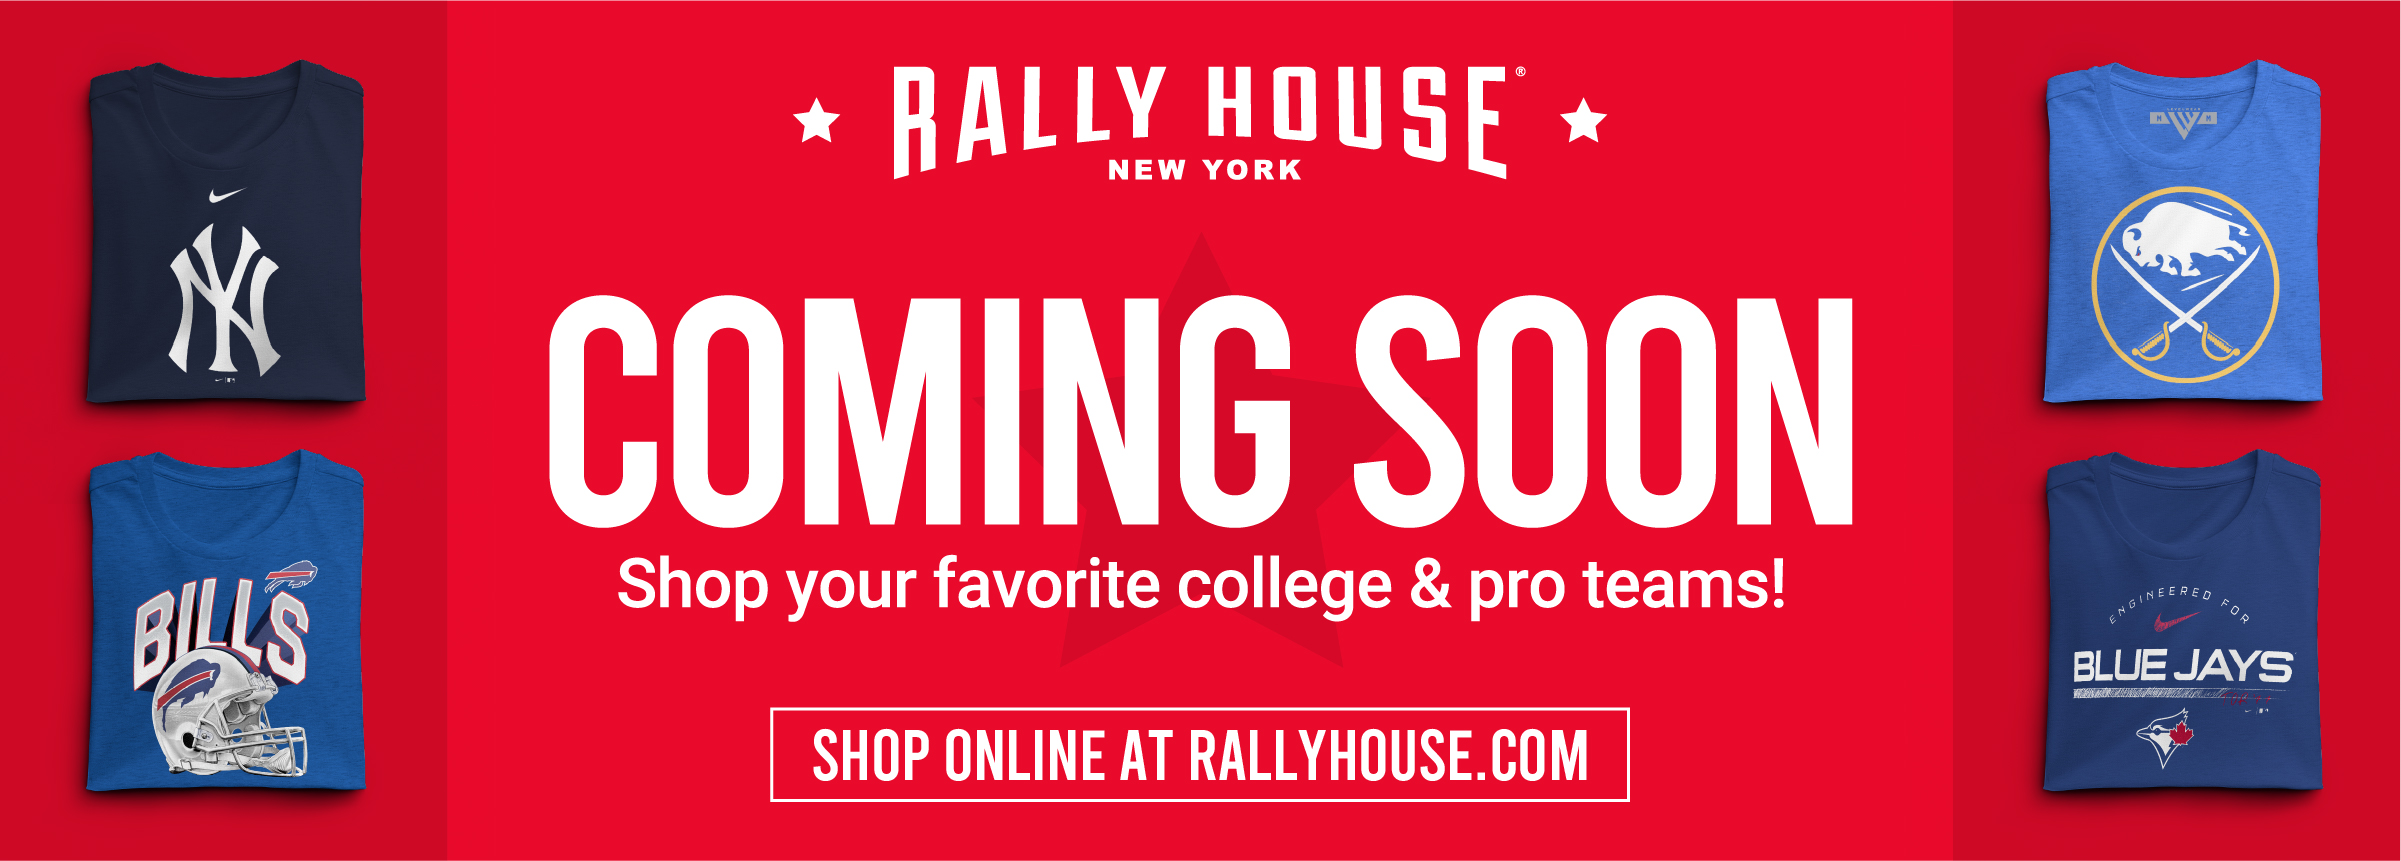 Rally House Homepage Hero Coming Soon NEW